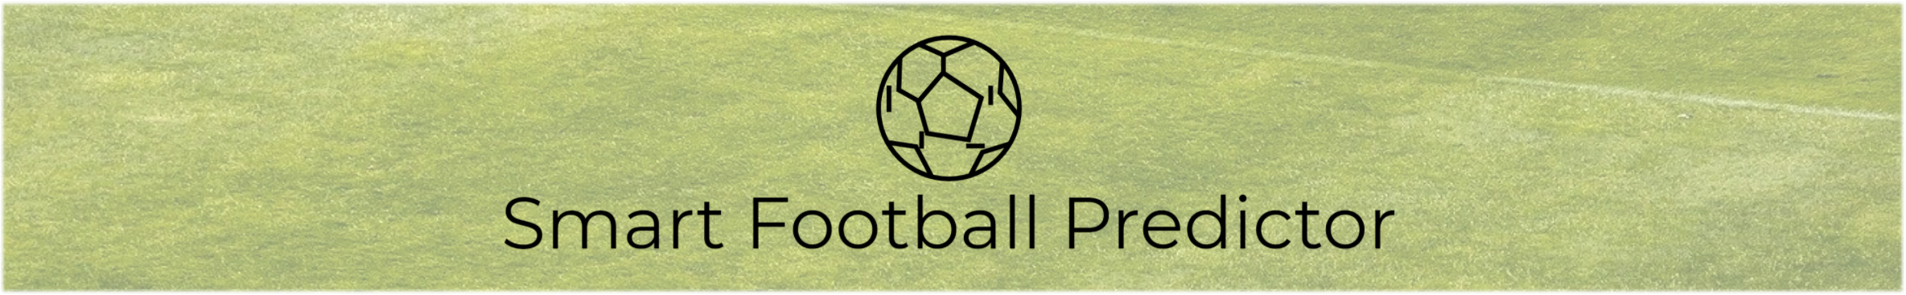 Football_Prediction_Project